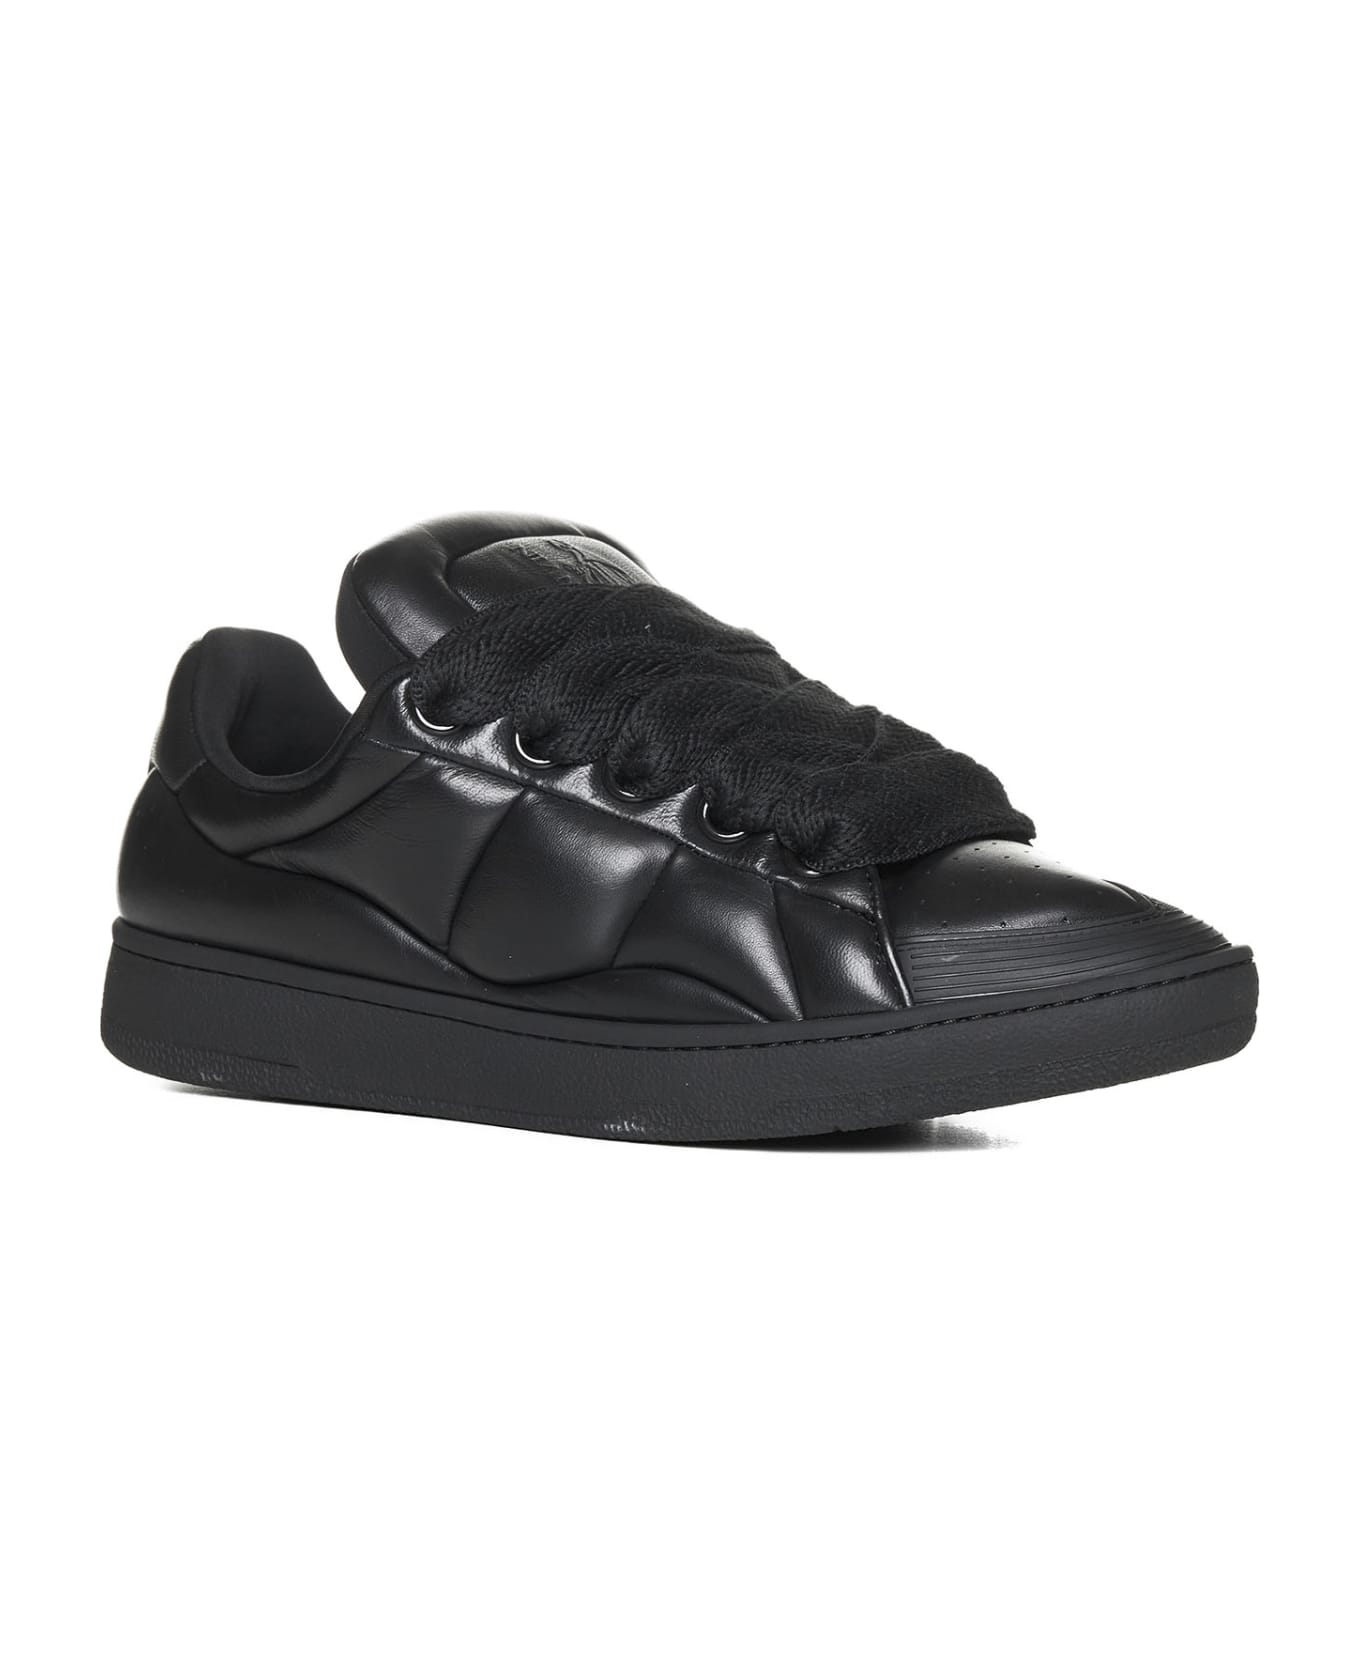 Lanvin Sneakers - Black/black スニーカー